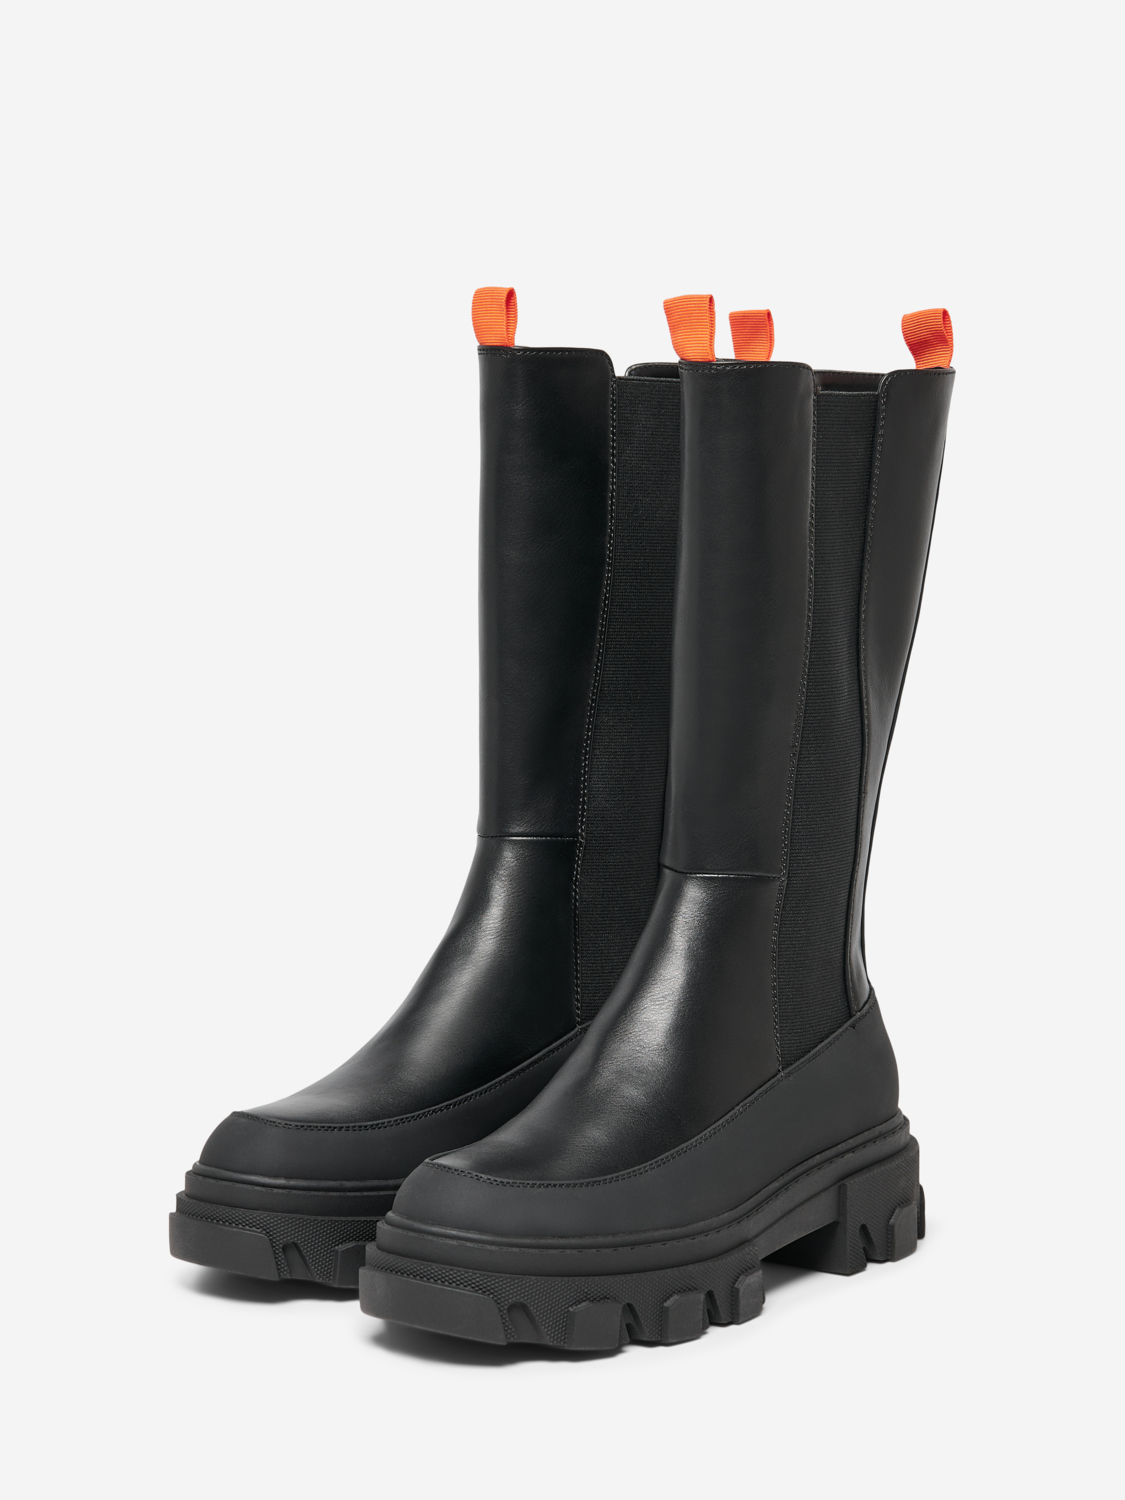 FINAL SALE - Tola faux leather boots, , large